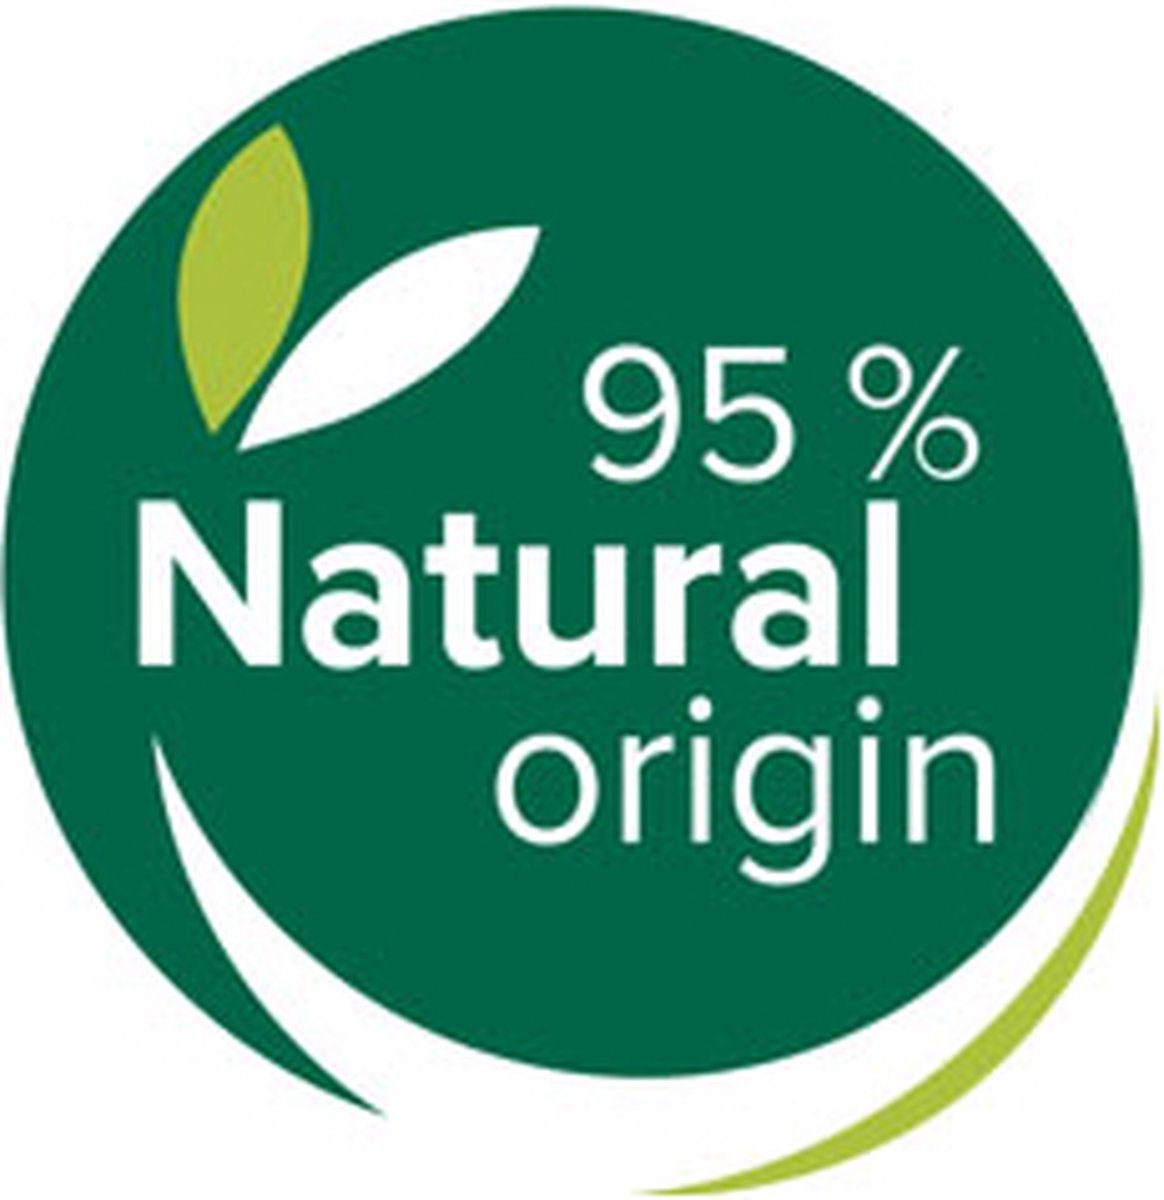 palmolive naturals logo